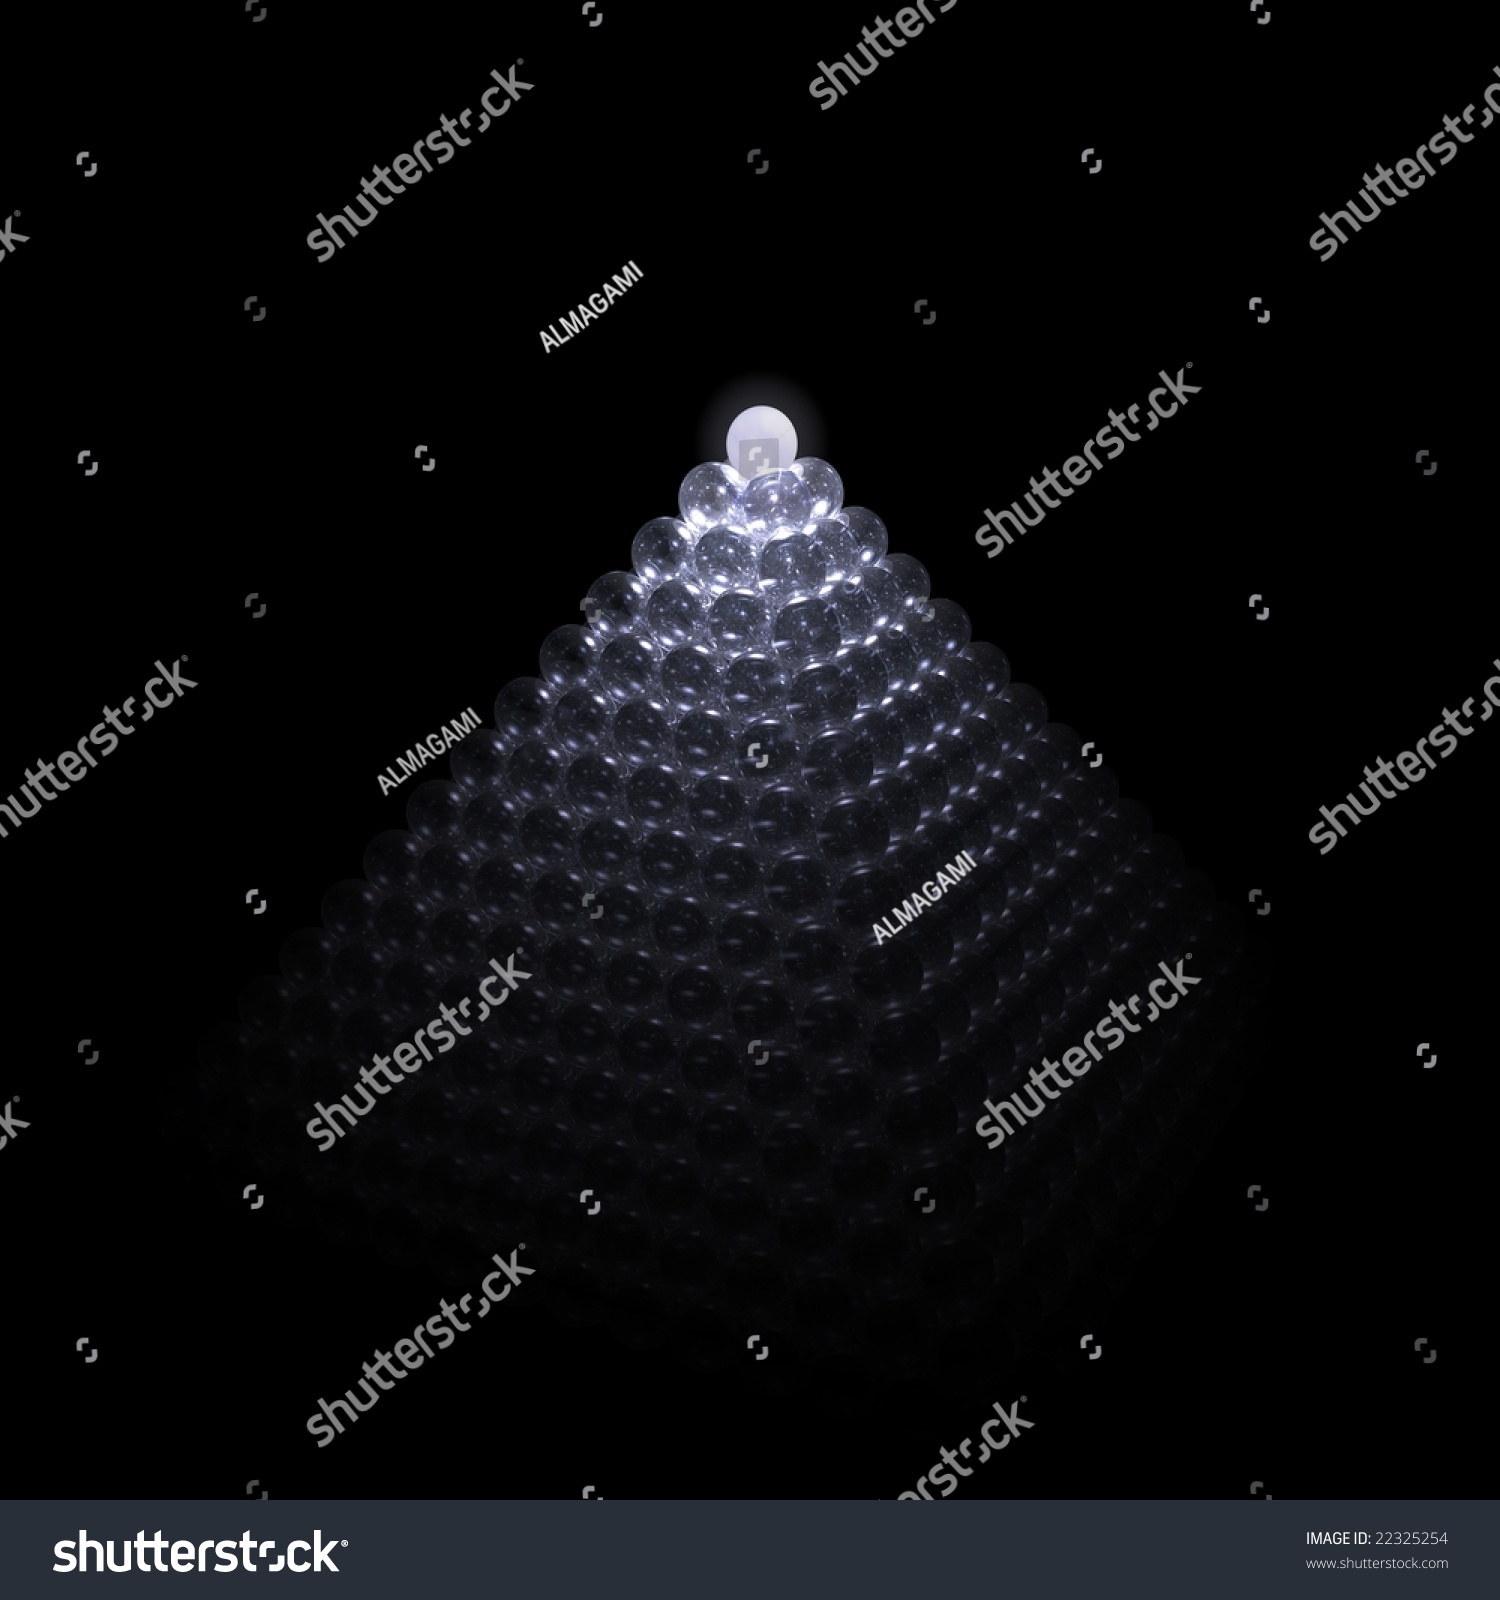 Light Top Of Pyramid Stock Photo 22325254 : Shutterstock